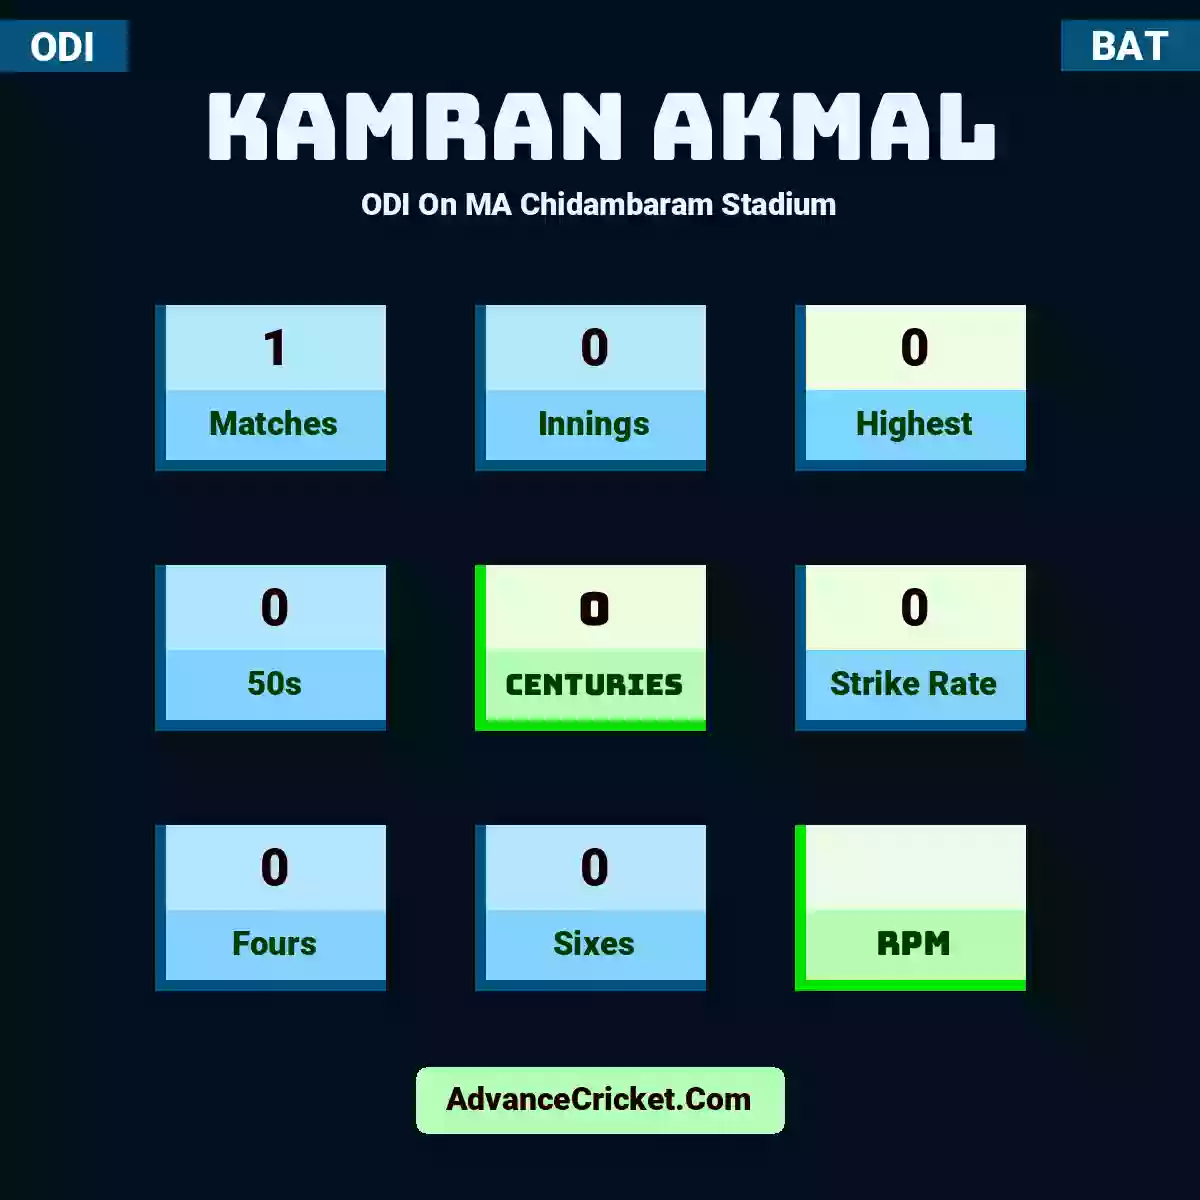 Kamran Akmal ODI  On MA Chidambaram Stadium, Kamran Akmal played 1 matches, scored 0 runs as highest, 0 half-centuries, and 0 centuries, with a strike rate of 0. K.Akmal hit 0 fours and 0 sixes.